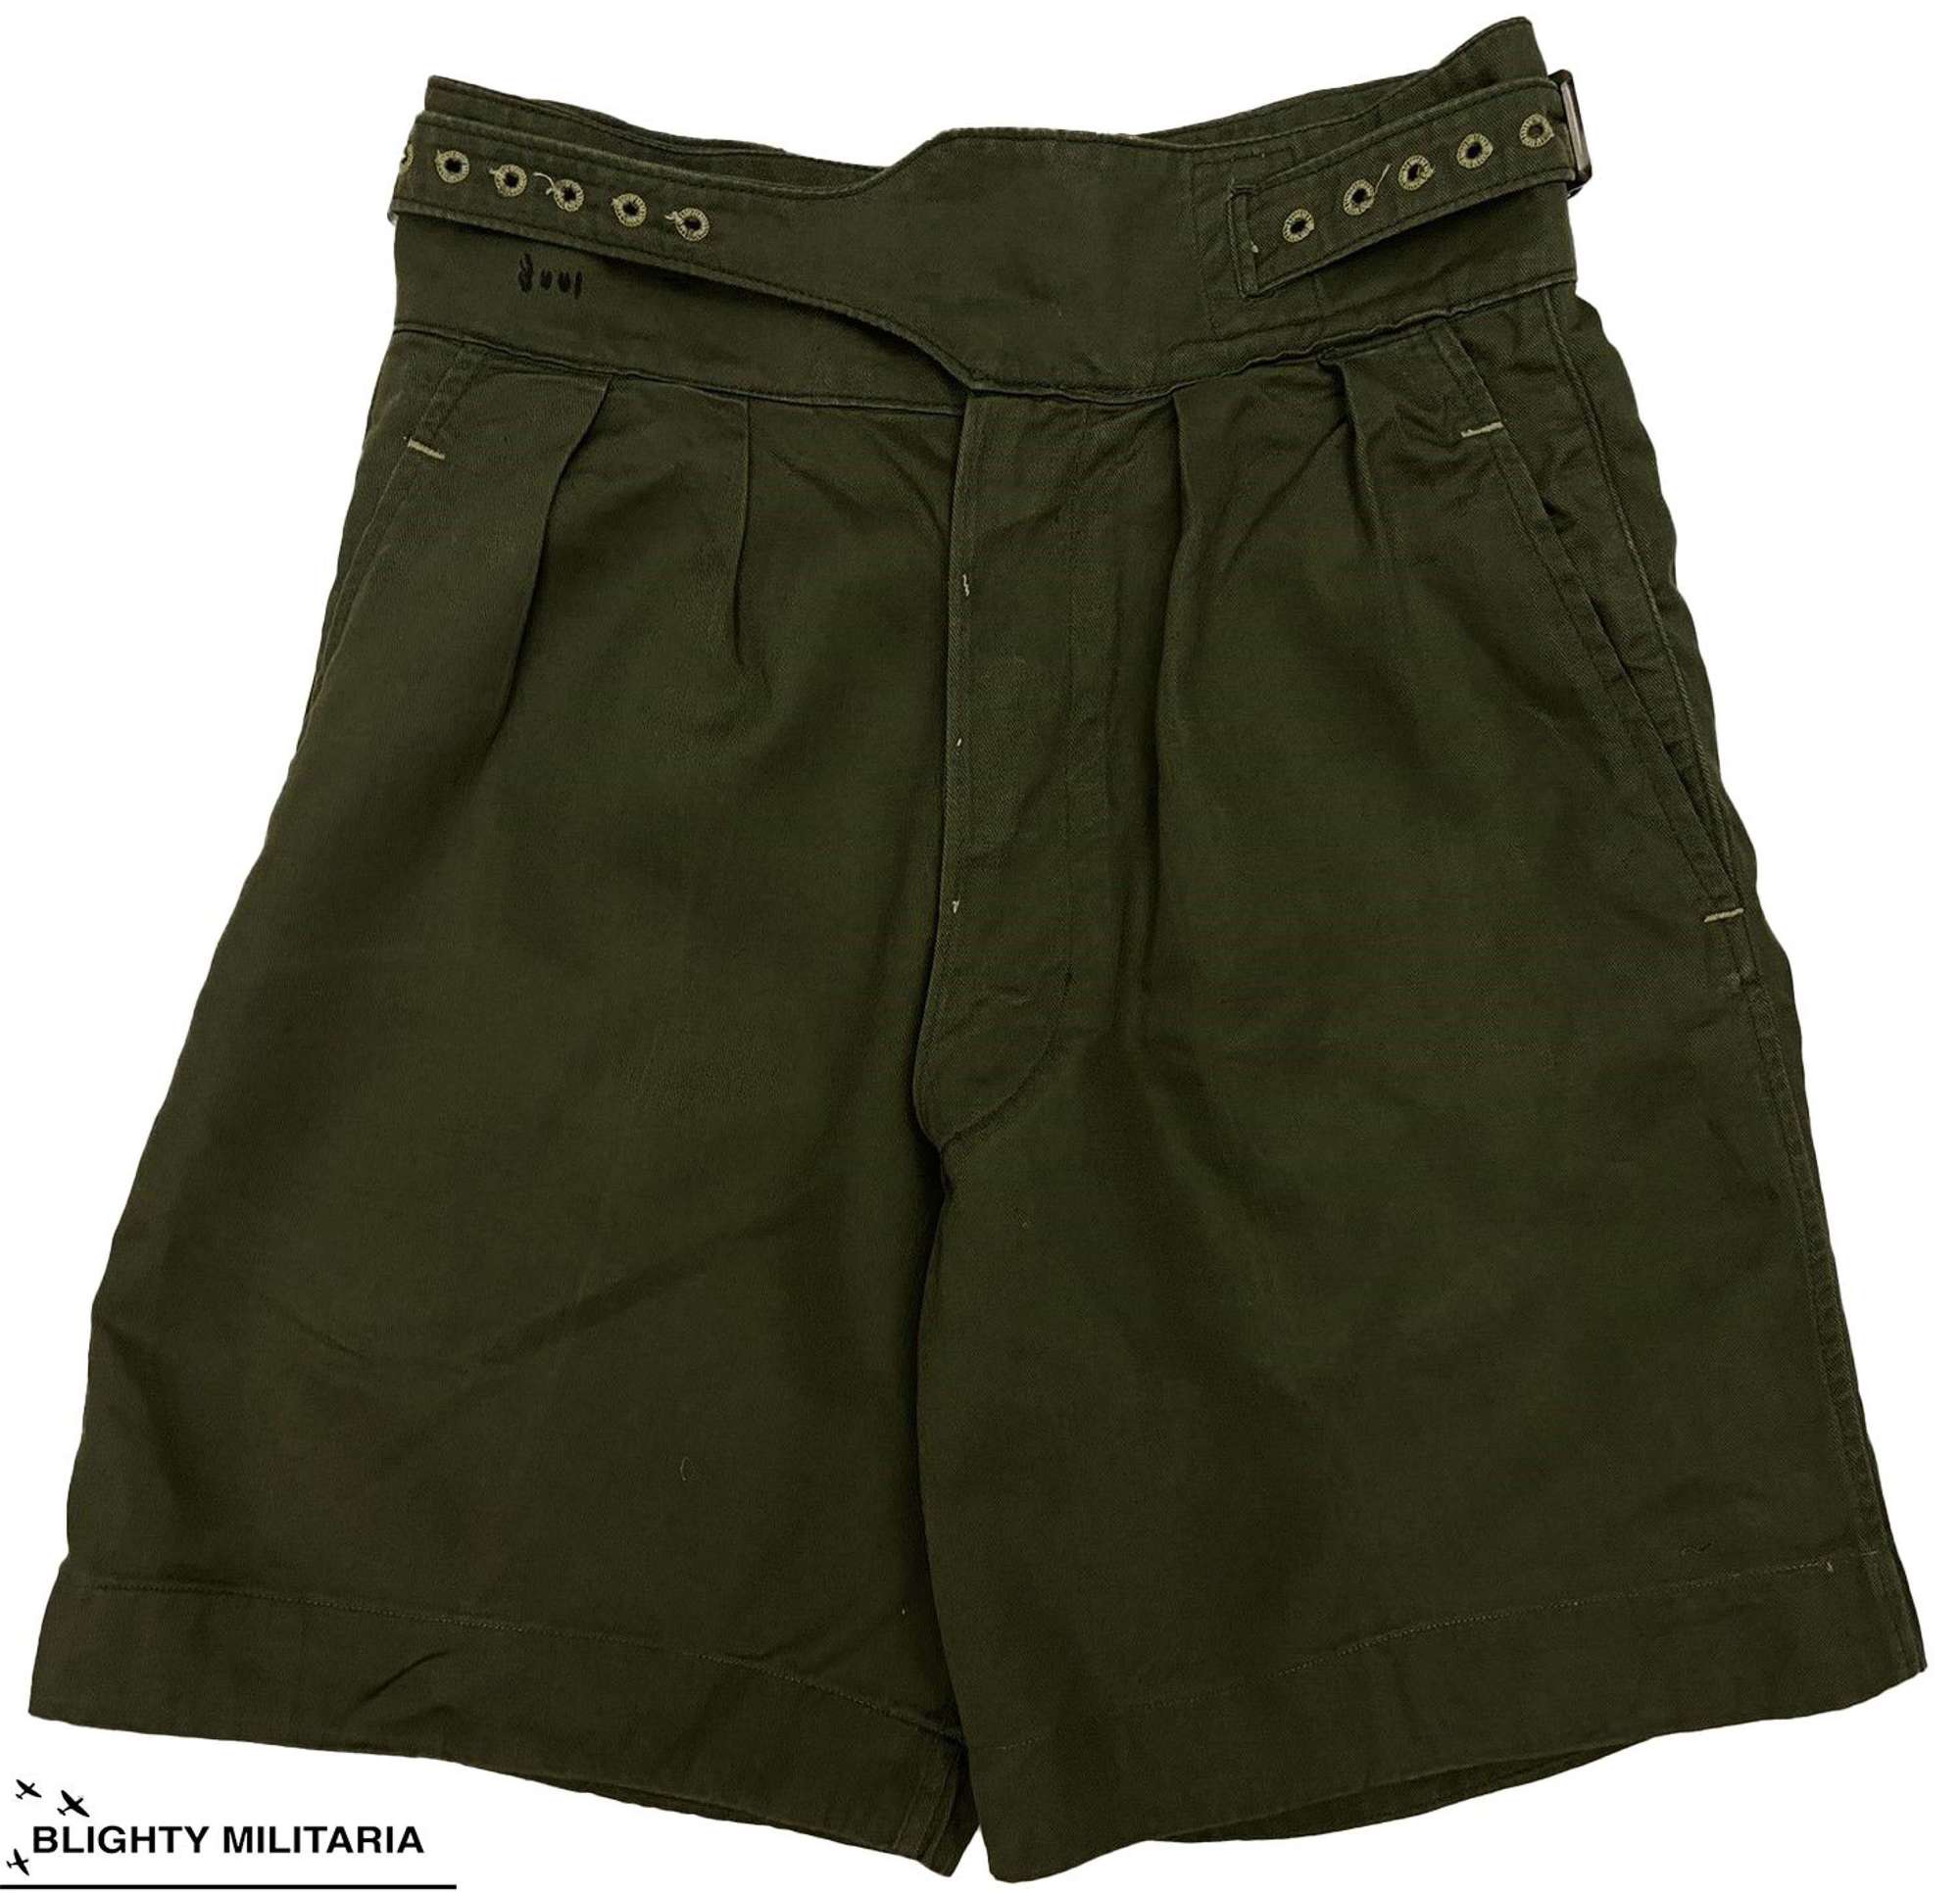 Original 1954 Dated 1950 Pattern Jungle Green Shorts - Size 5